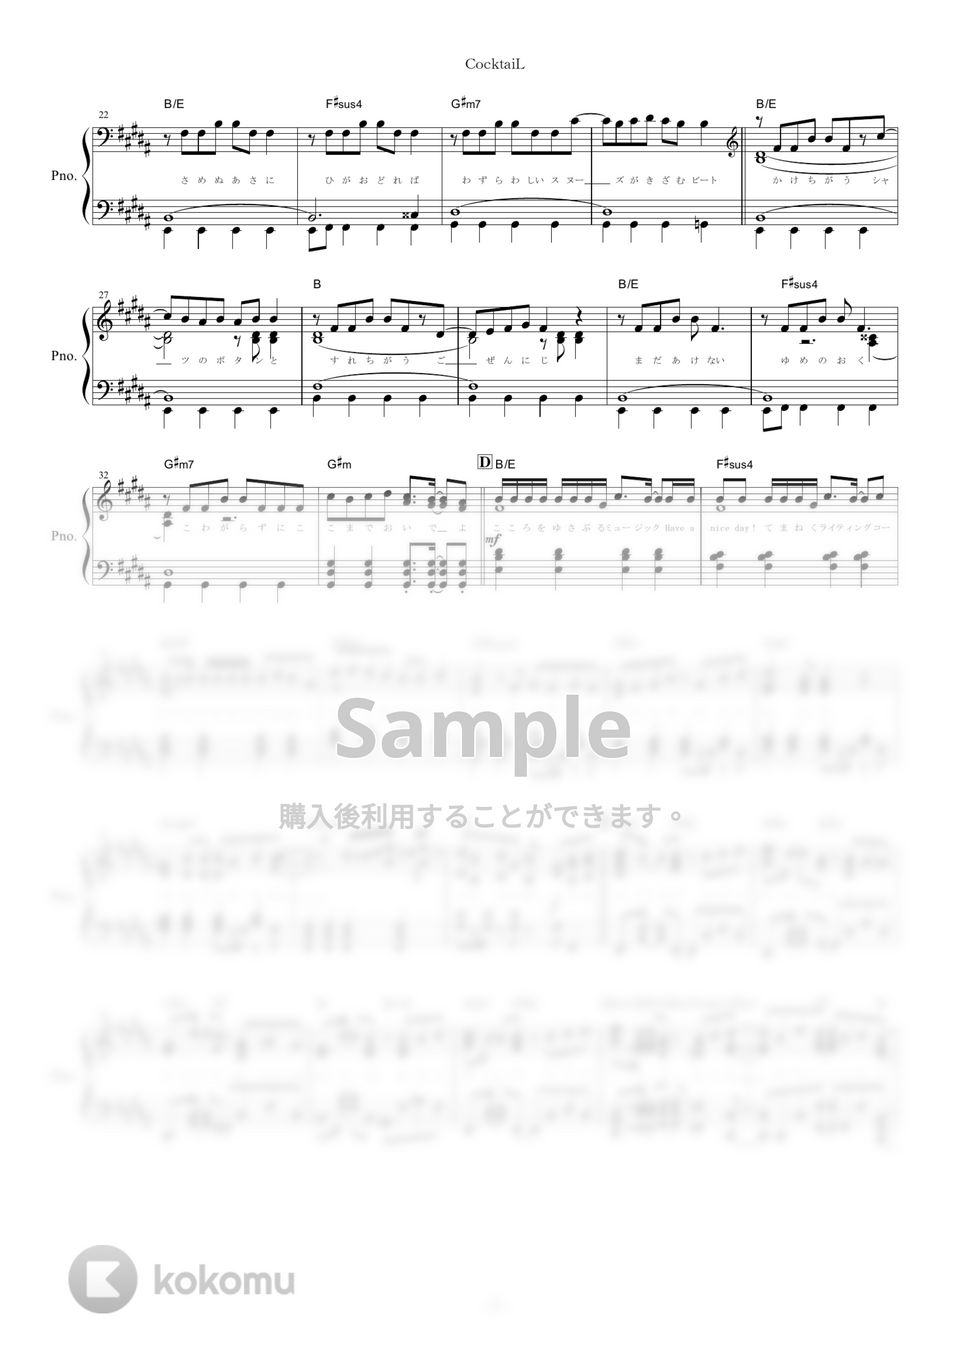 XYZ - CocktaiL (ピアノ楽譜/全６ページ) by yoshi